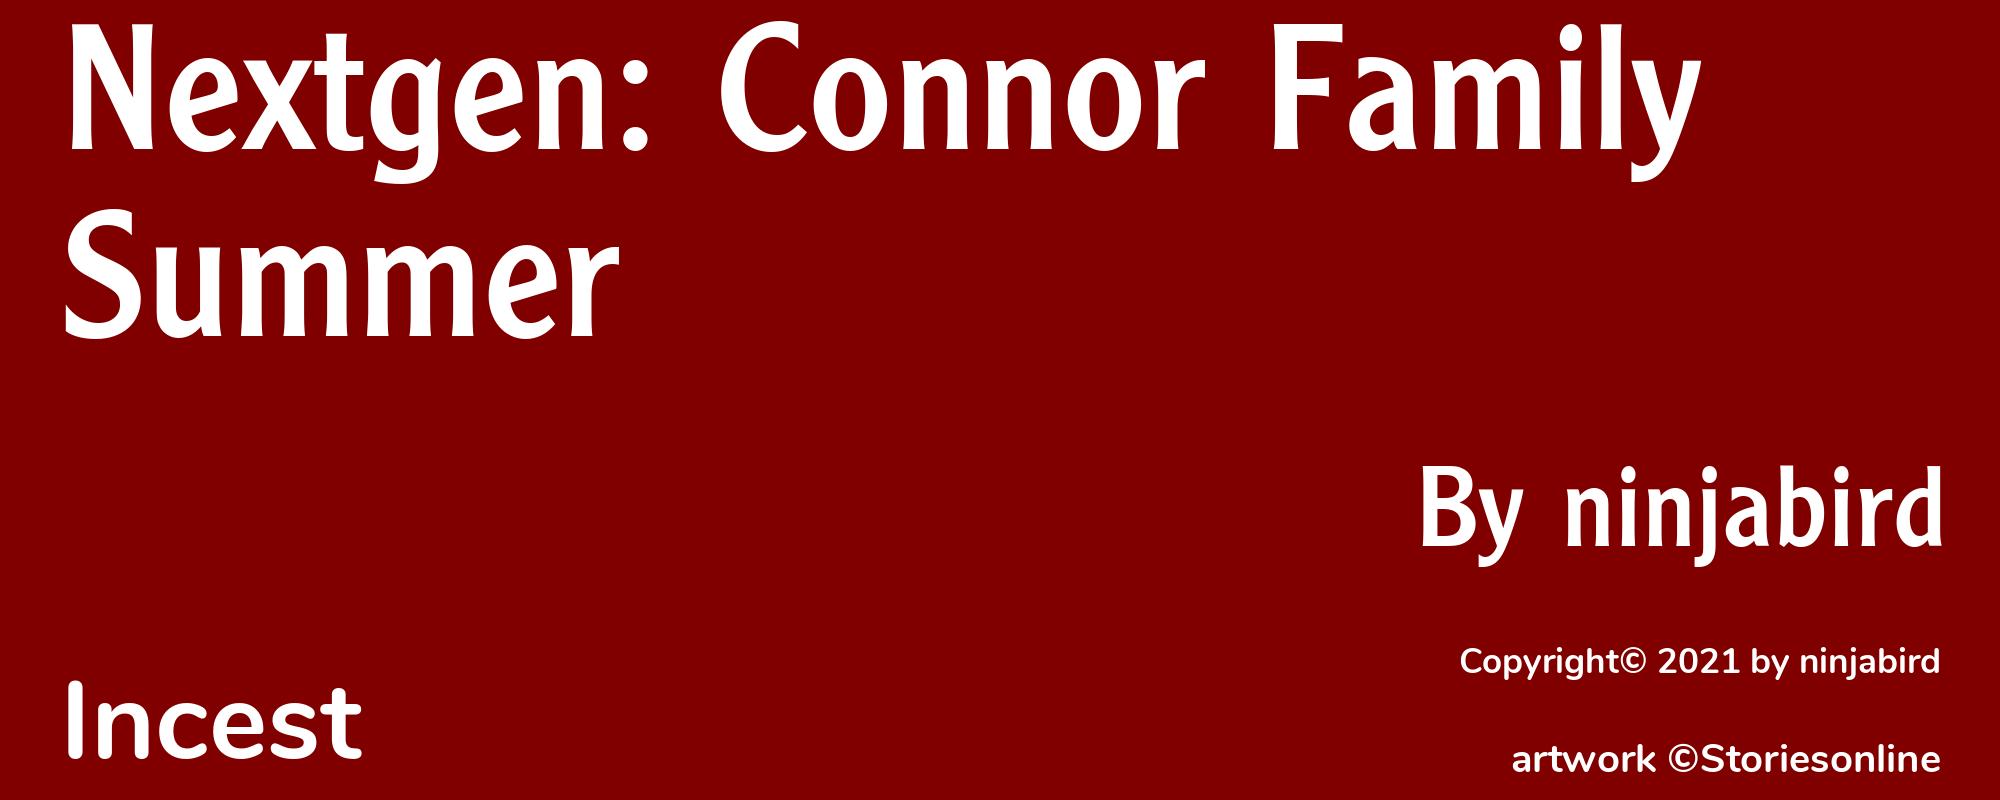 Nextgen: Connor Family Summer - Cover